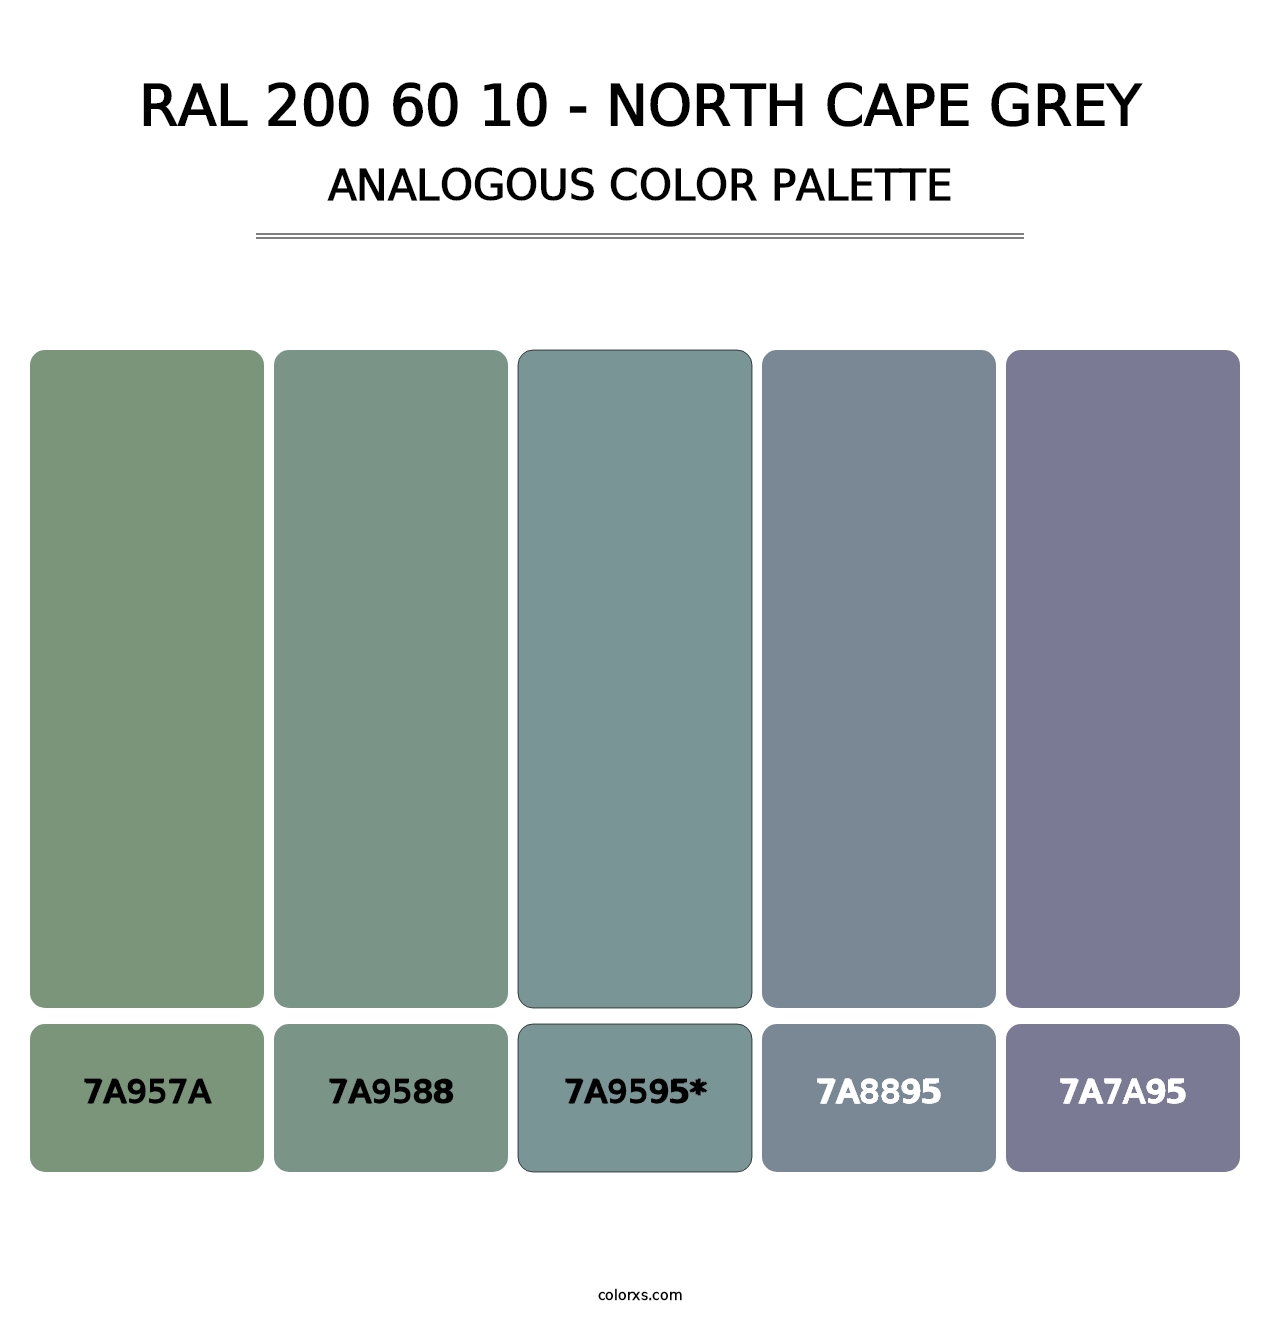 RAL 200 60 10 - North Cape Grey - Analogous Color Palette